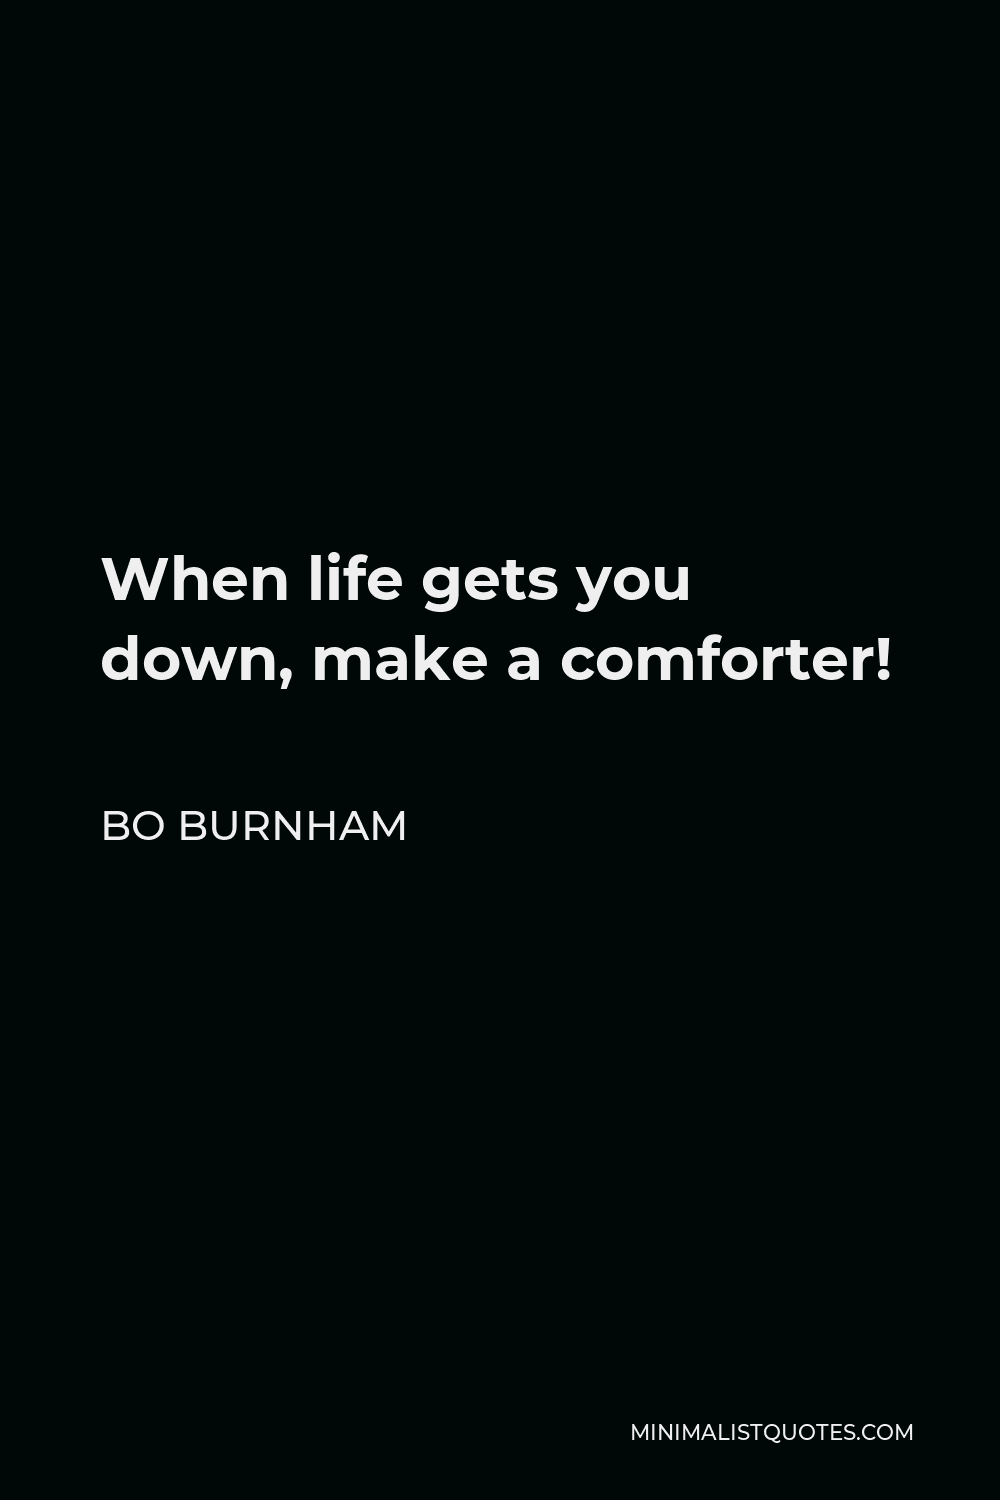 Bo Burnham Quote - When life gets you down, make a comforter!